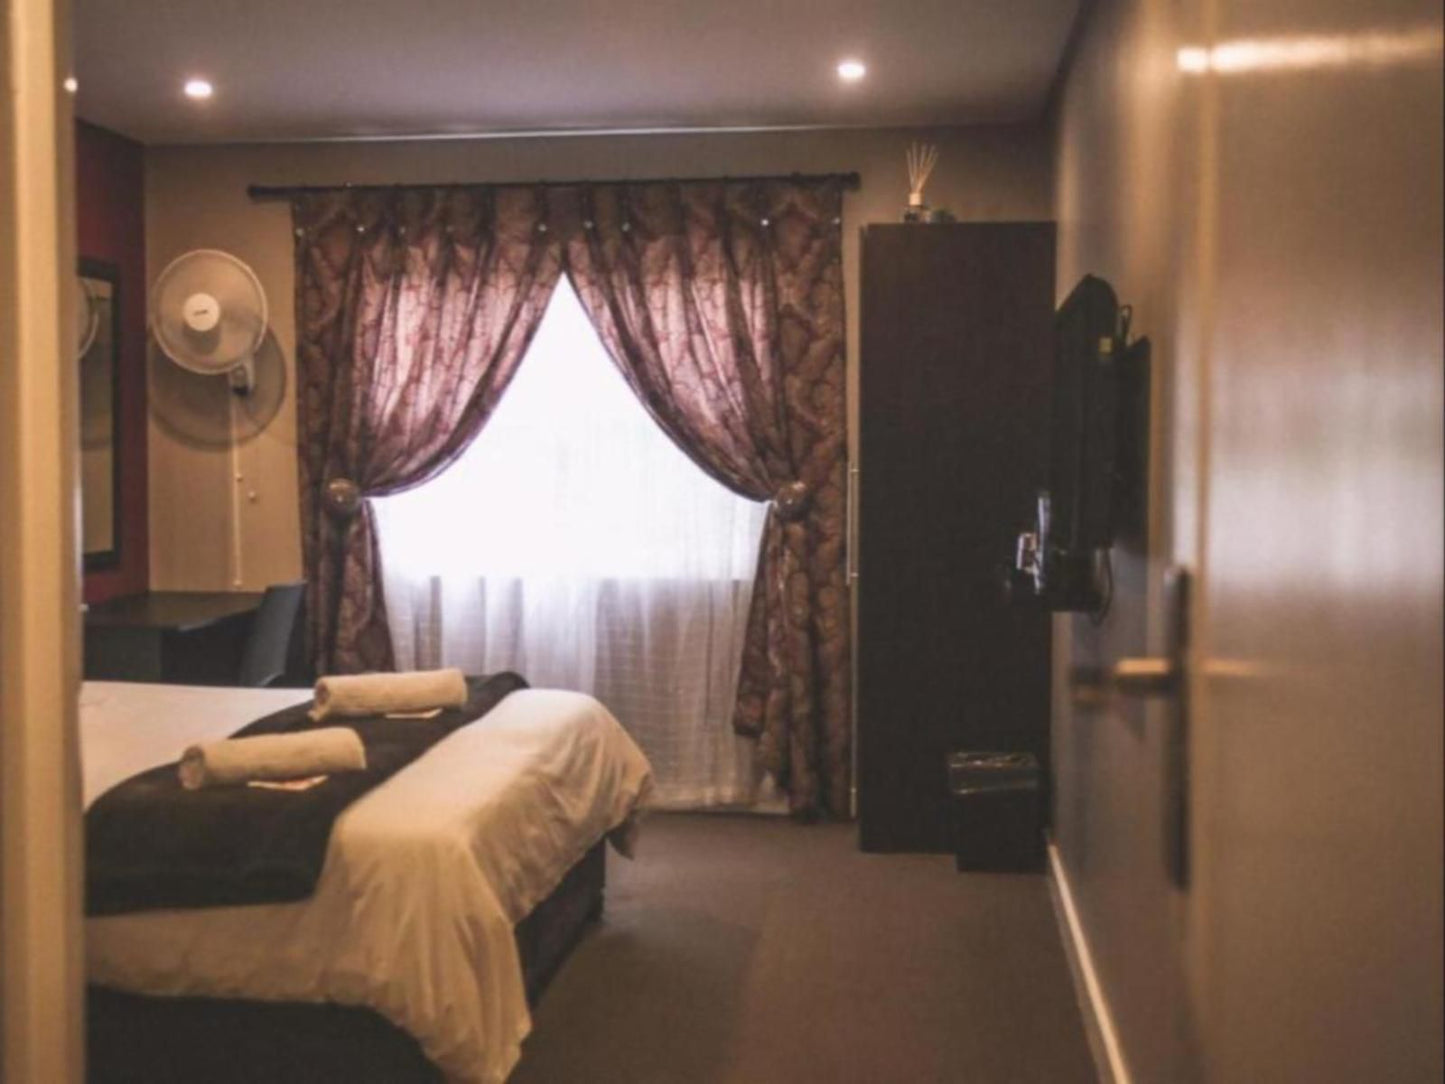 Biggy Best Cottages Howick Kwazulu Natal South Africa Bedroom